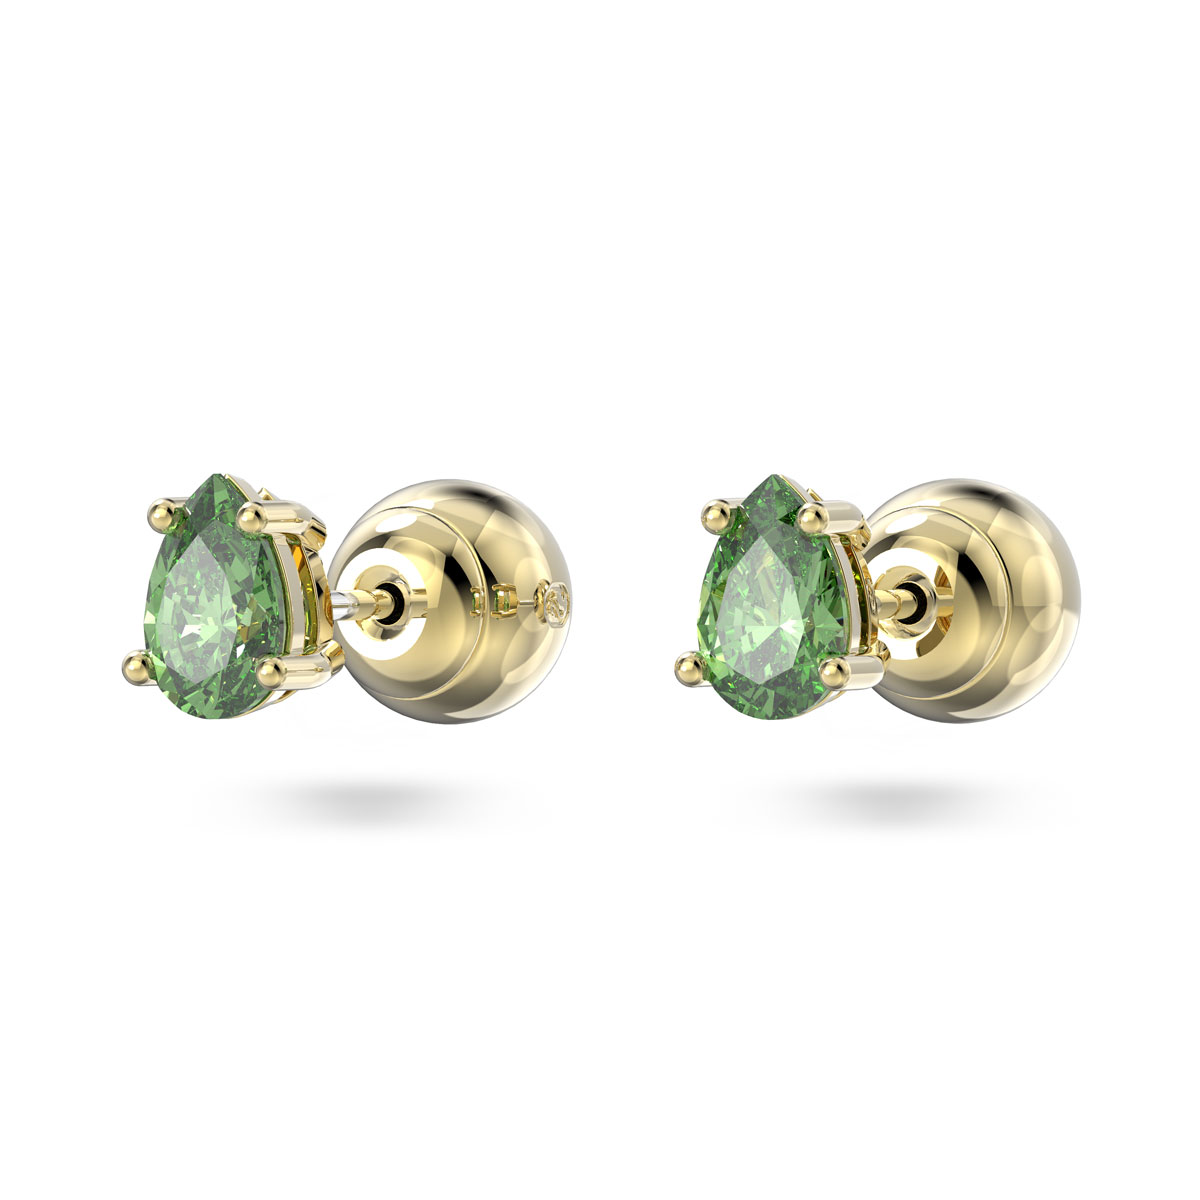 Swarovski Jewelry Stilla Stud Earrings, Pear Cut, Green, Gold Tone Plated